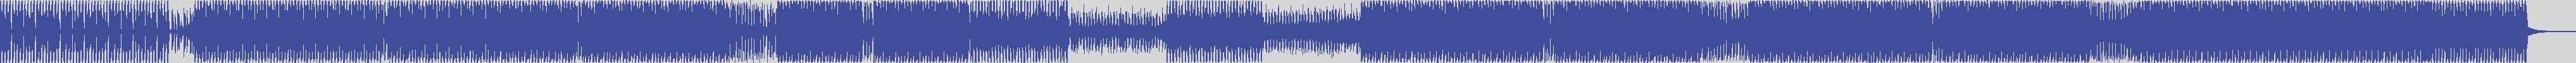 space_round [SRR003] Manuel Rotondo - Boarding Pass [Original Mix] audio wave form